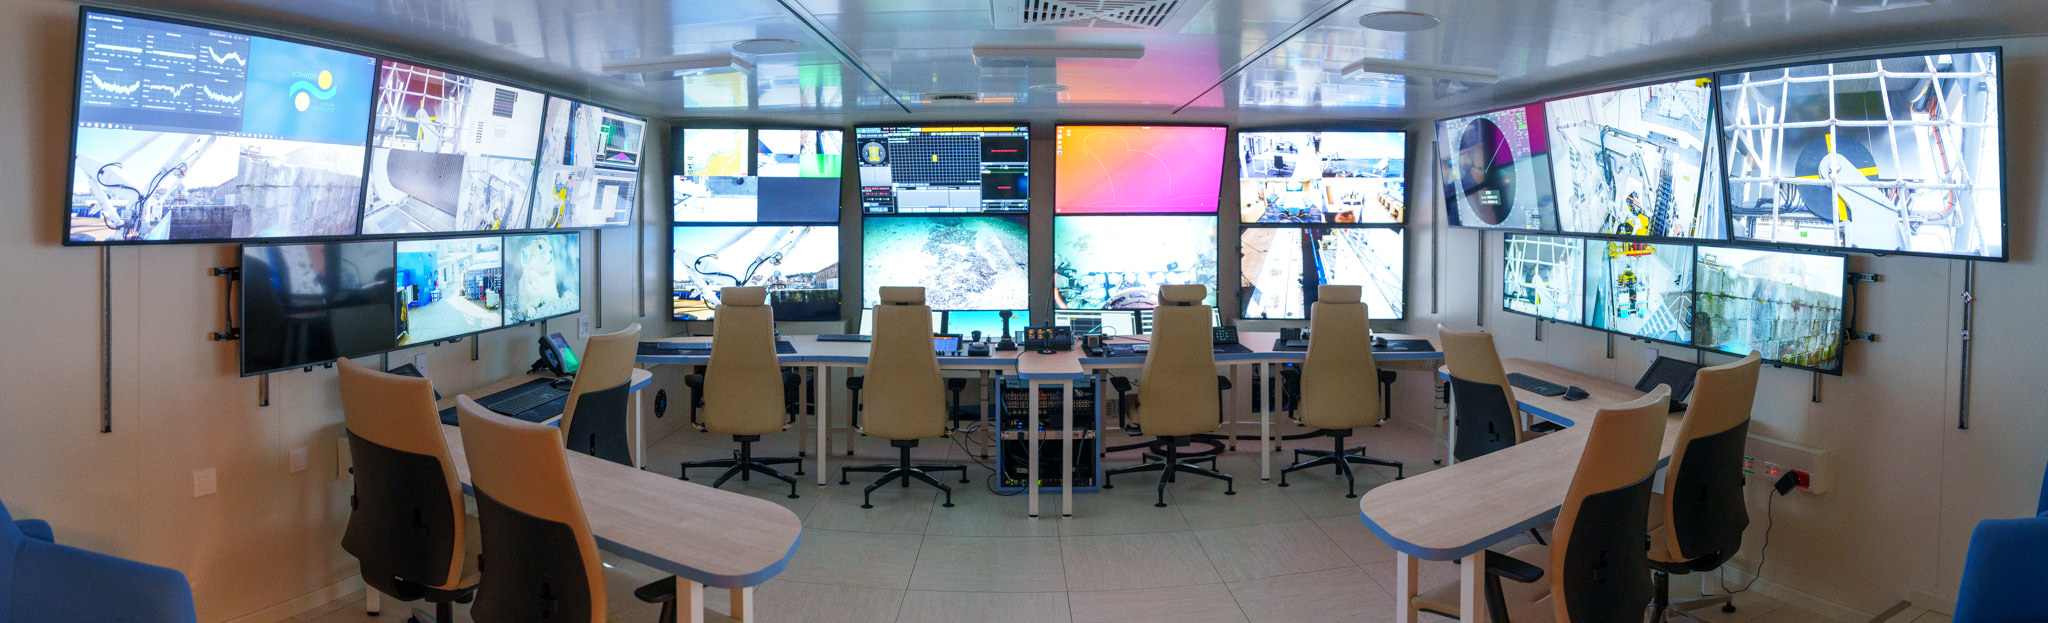 2 ROV Control Room on R V Falkor 